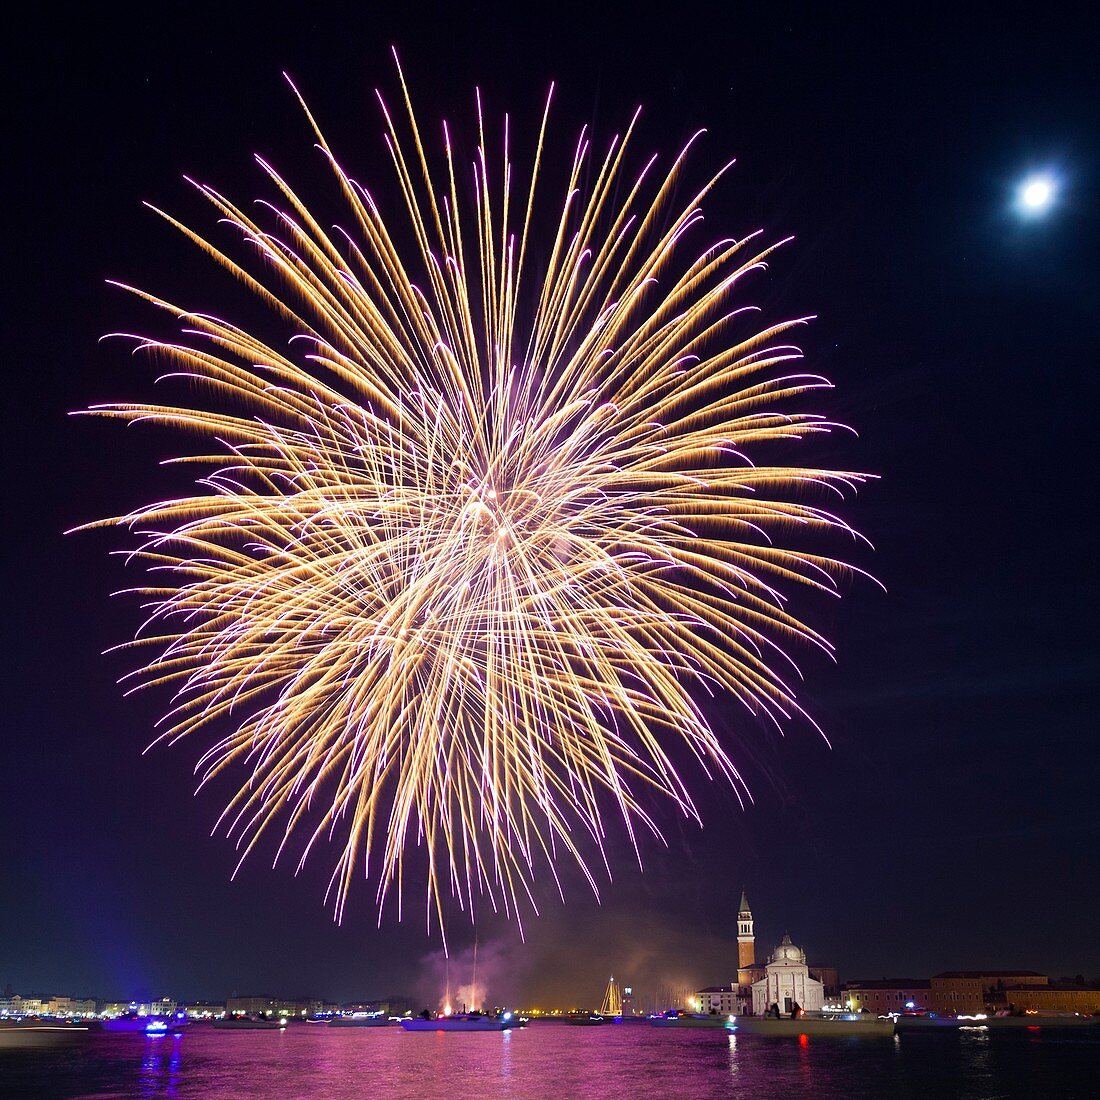 Fireworks over Venice